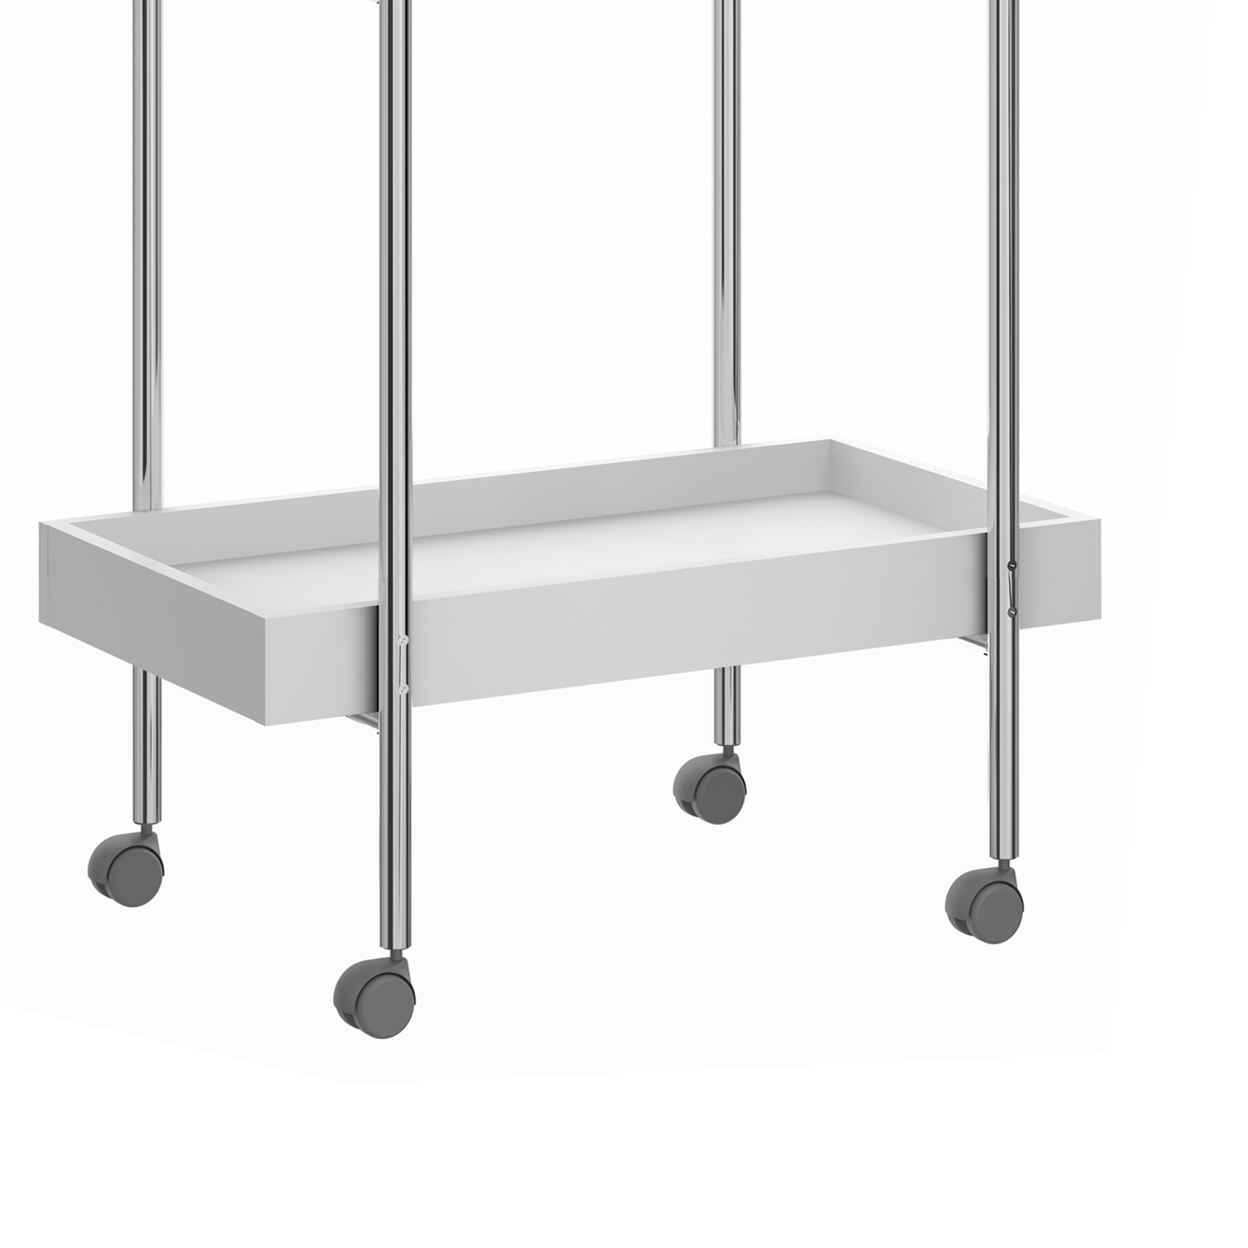 Storage Cart With 2 Tier Design And Metal Frame, White And Chrome- Saltoro Sherpi